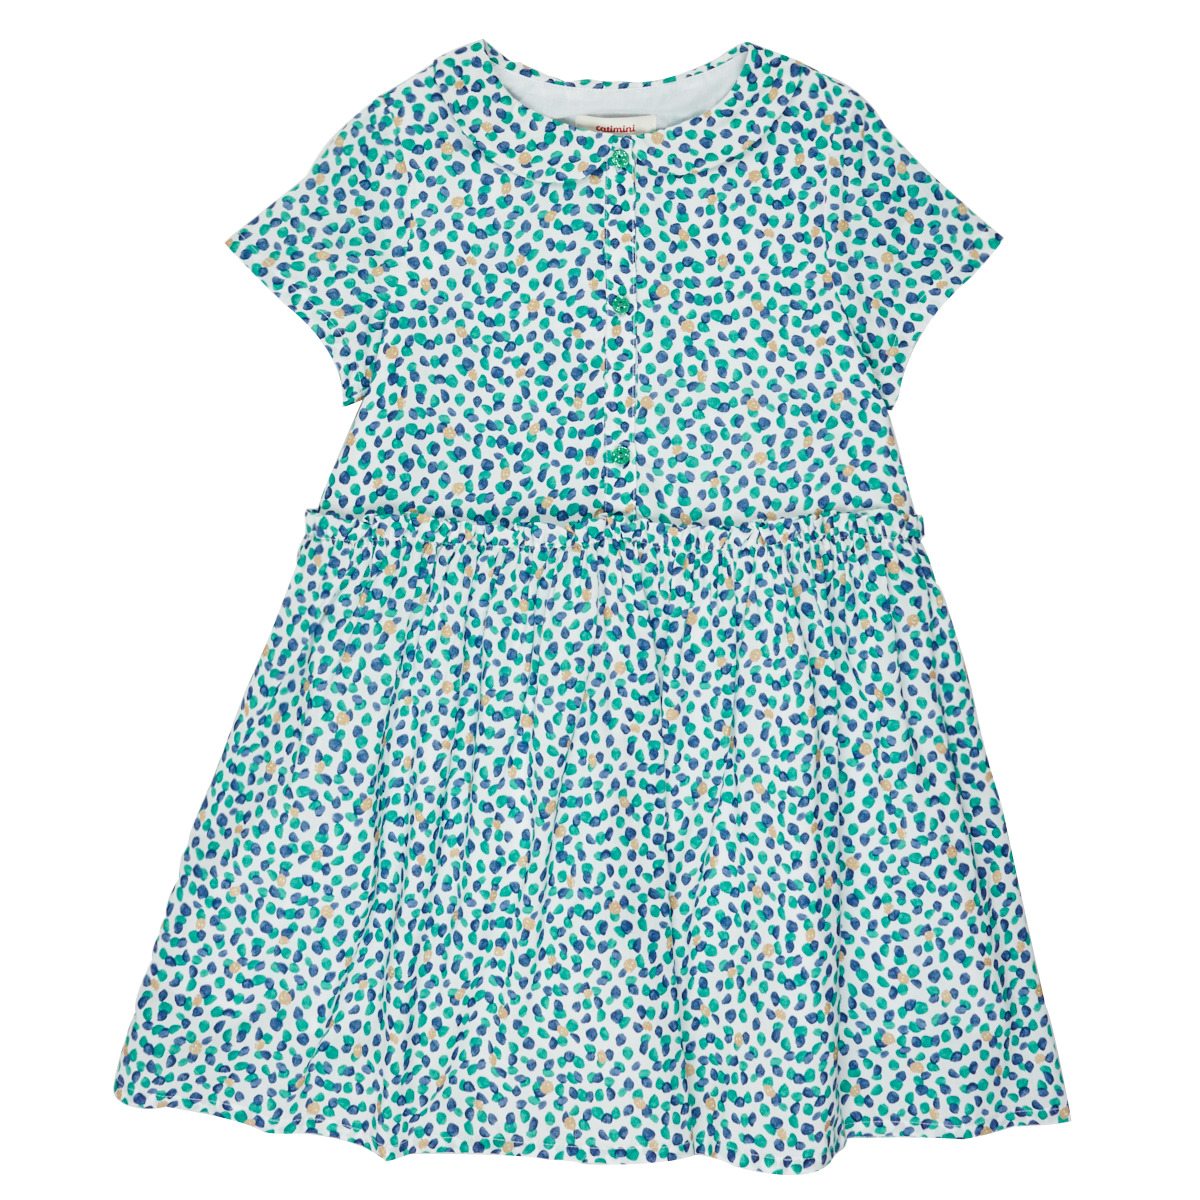 Textil Rapariga Preço de venda recomendado pelo fornecedor ELLA Branco